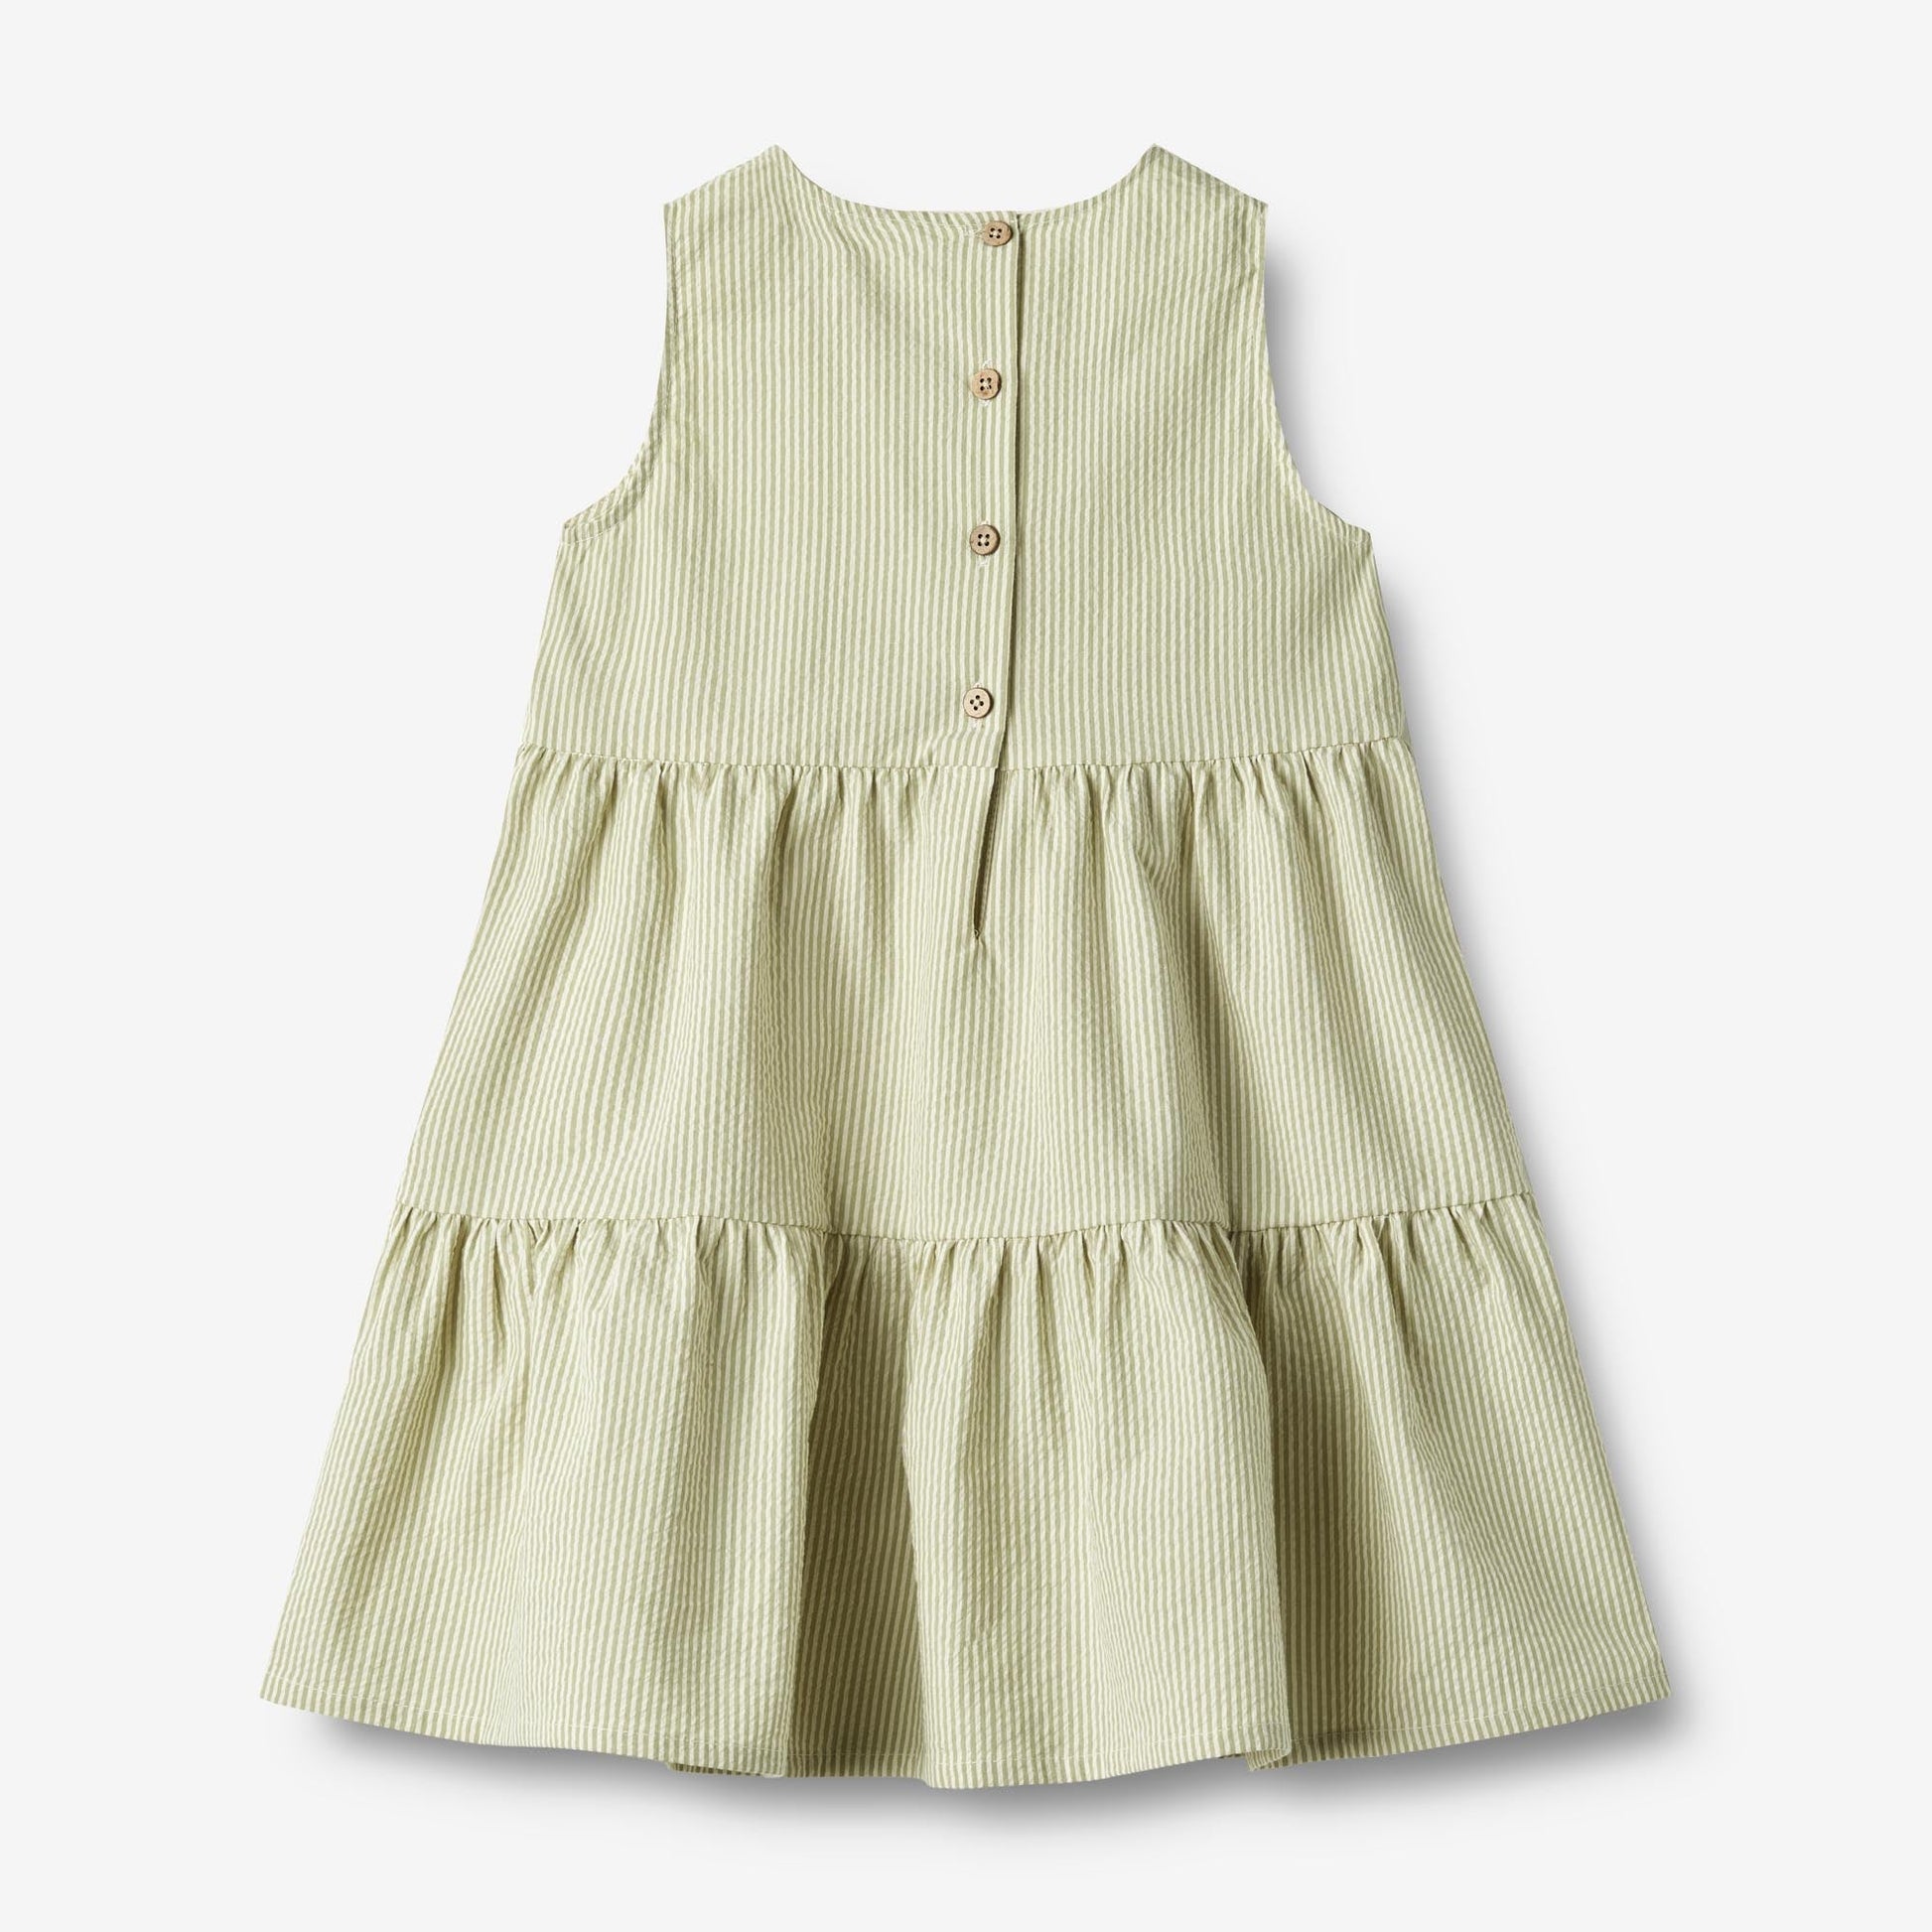 Wheat 'Luise' Children's Dress - Green Stripe